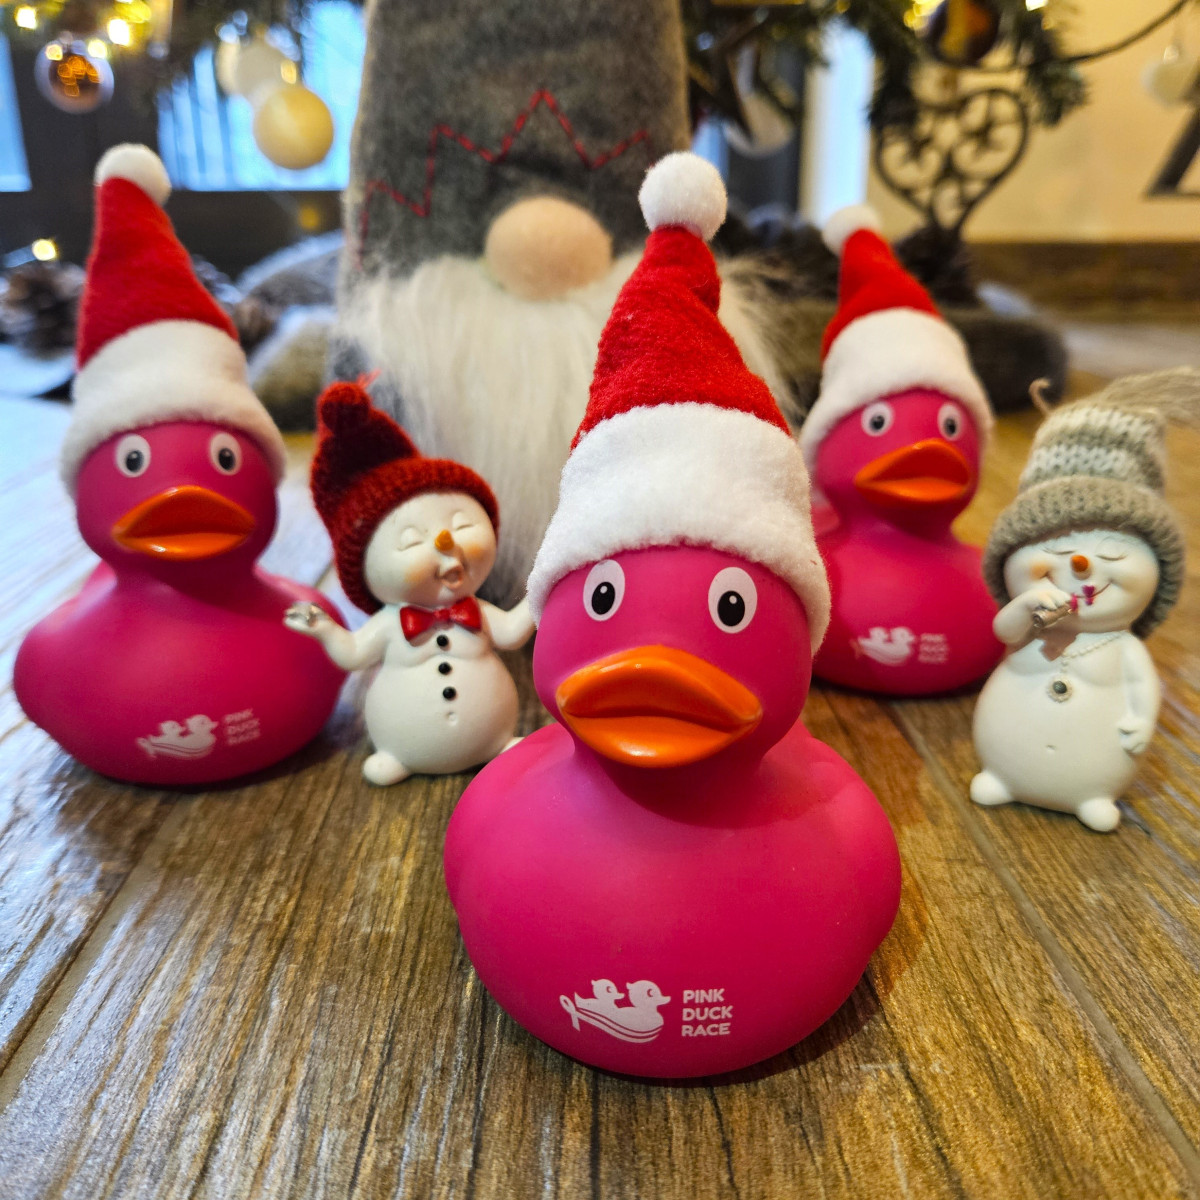 Quack Quack - adopt a Pink Duck this Christmas 💗